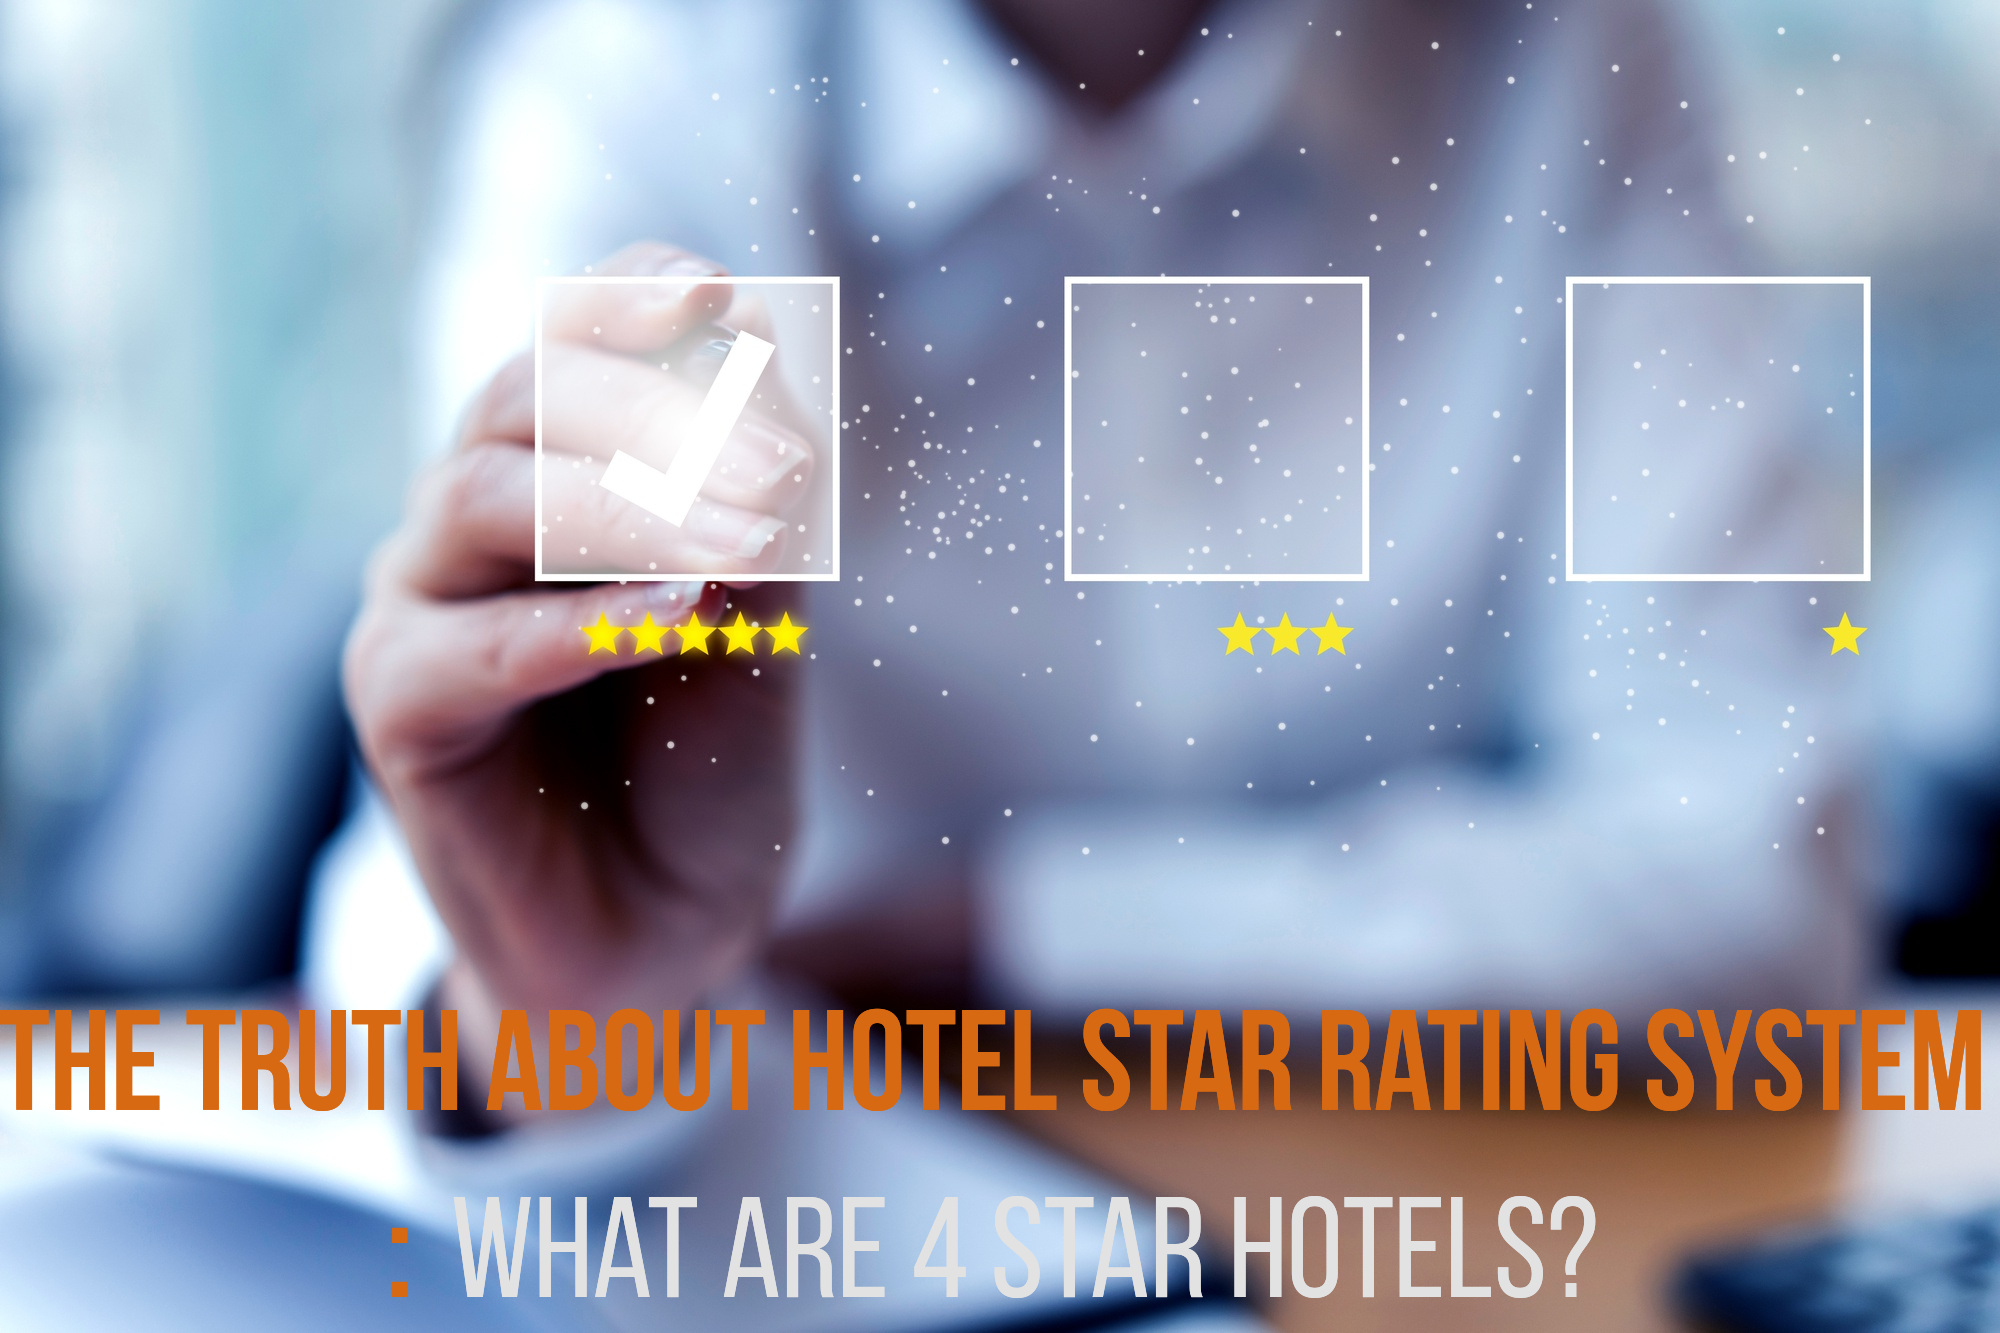 5 star hotel